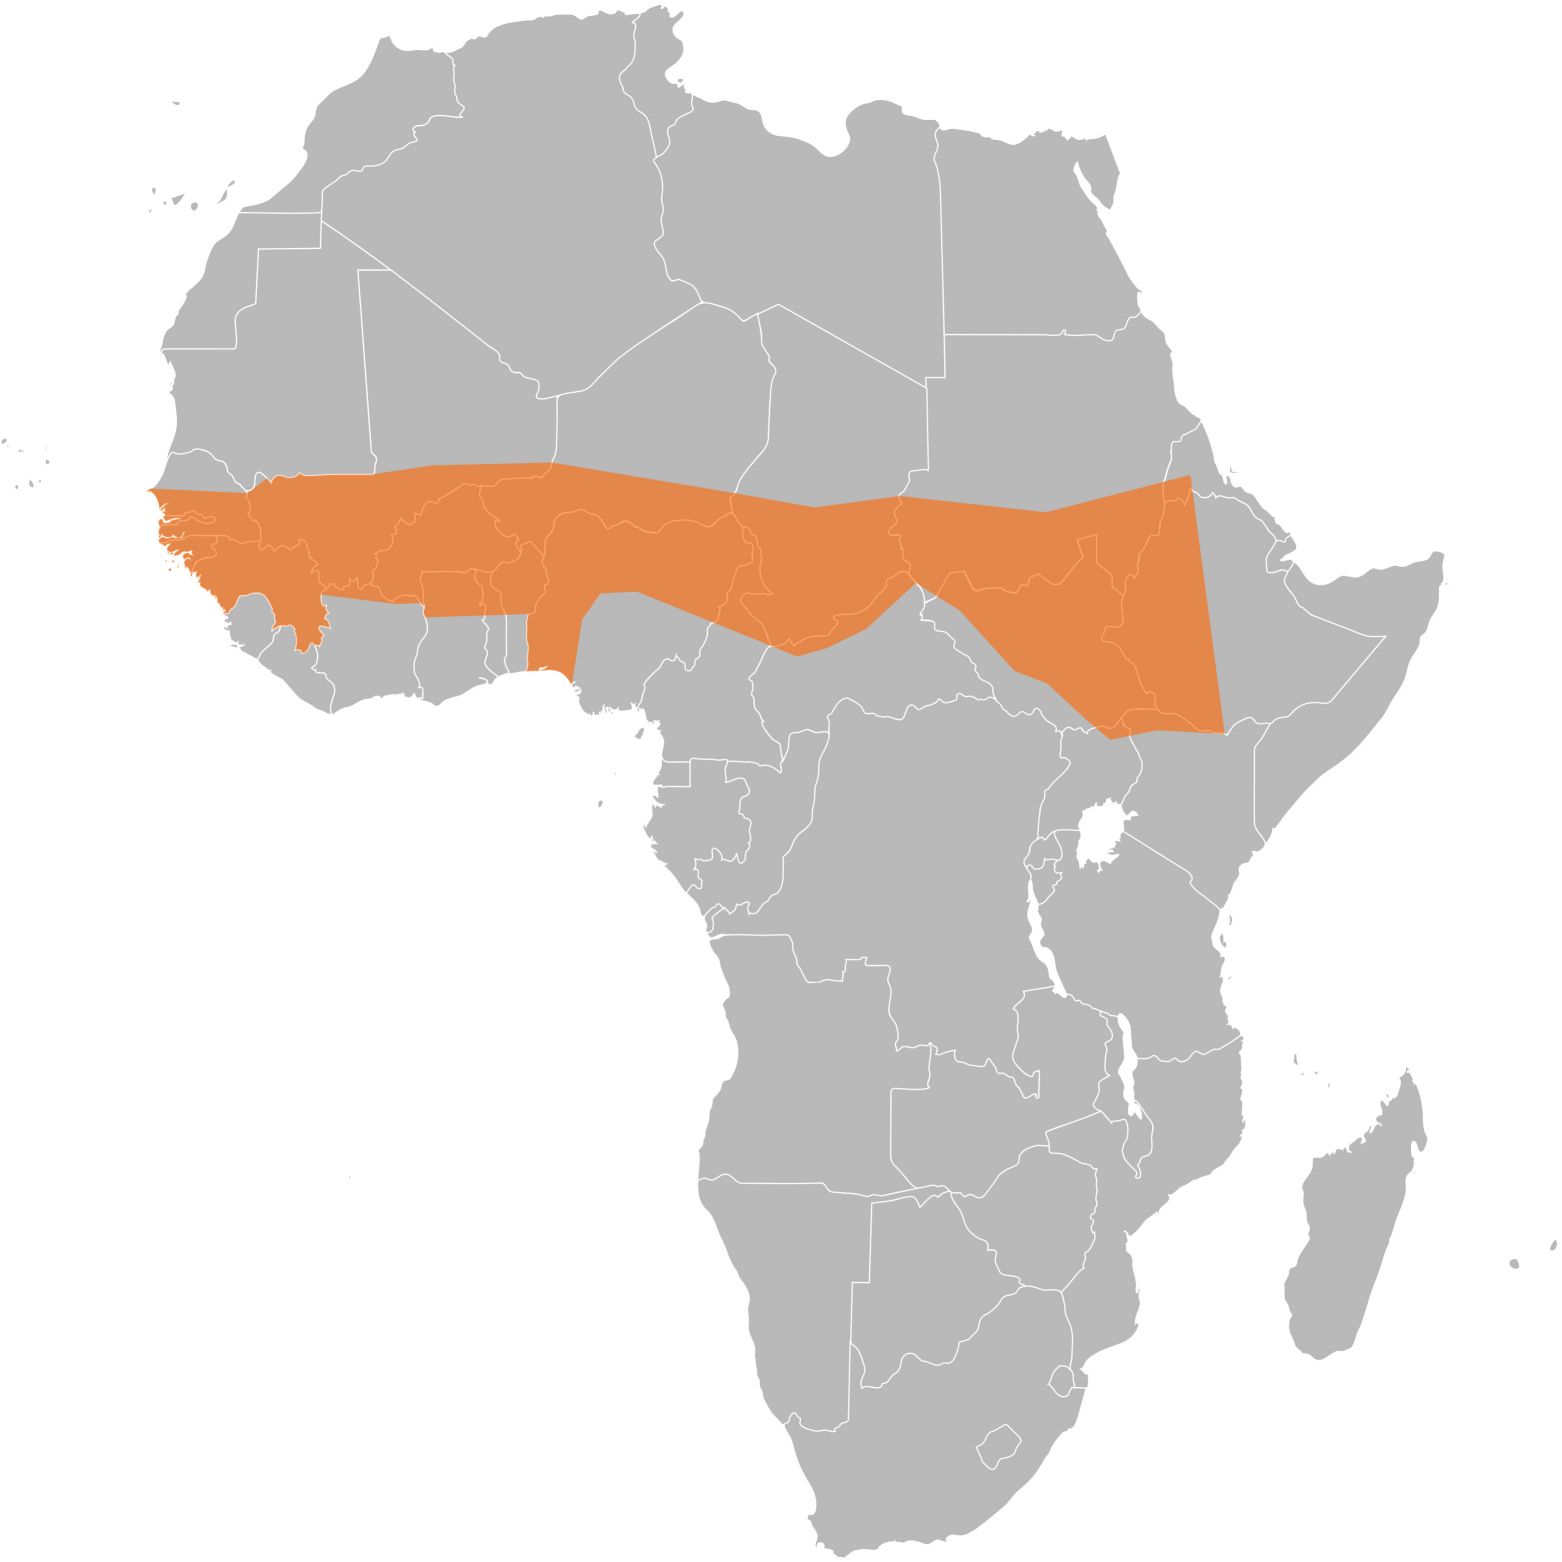 Fig. 1 Distribution of meningococcal meningitis in the African meningitis belt reveals regional patterns and hotspots. （From Wikipedia: By Ninjatacoshell - Own work， https://commons.wikimedia.org/wiki/File:Meningococcal_Meningitis_Range.svg)